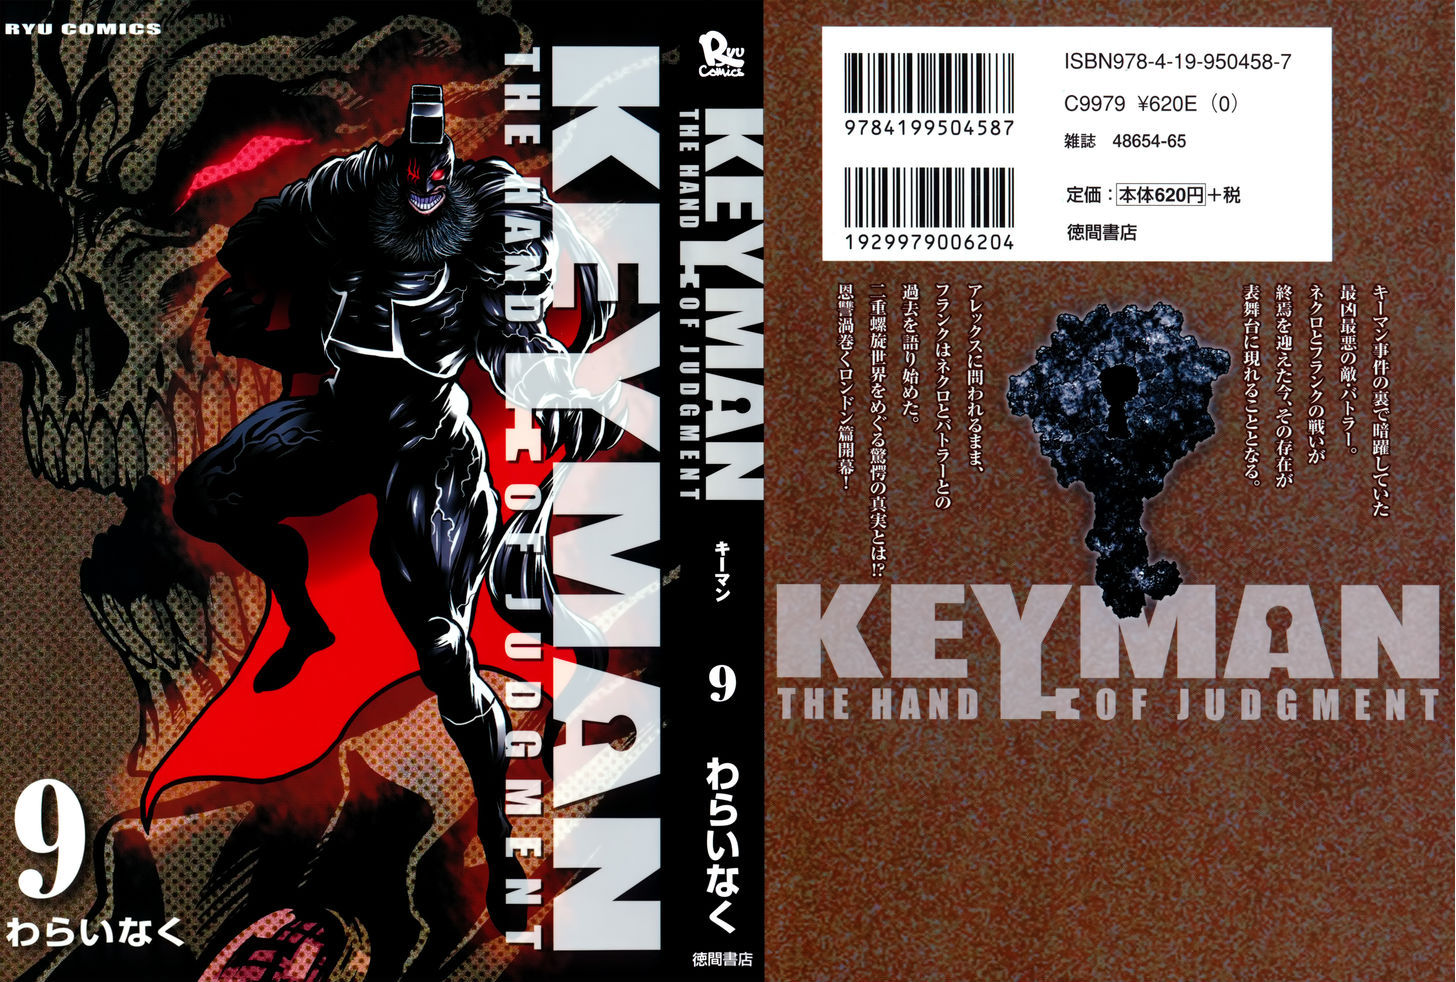 Keyman - The Hand of Judgement 40